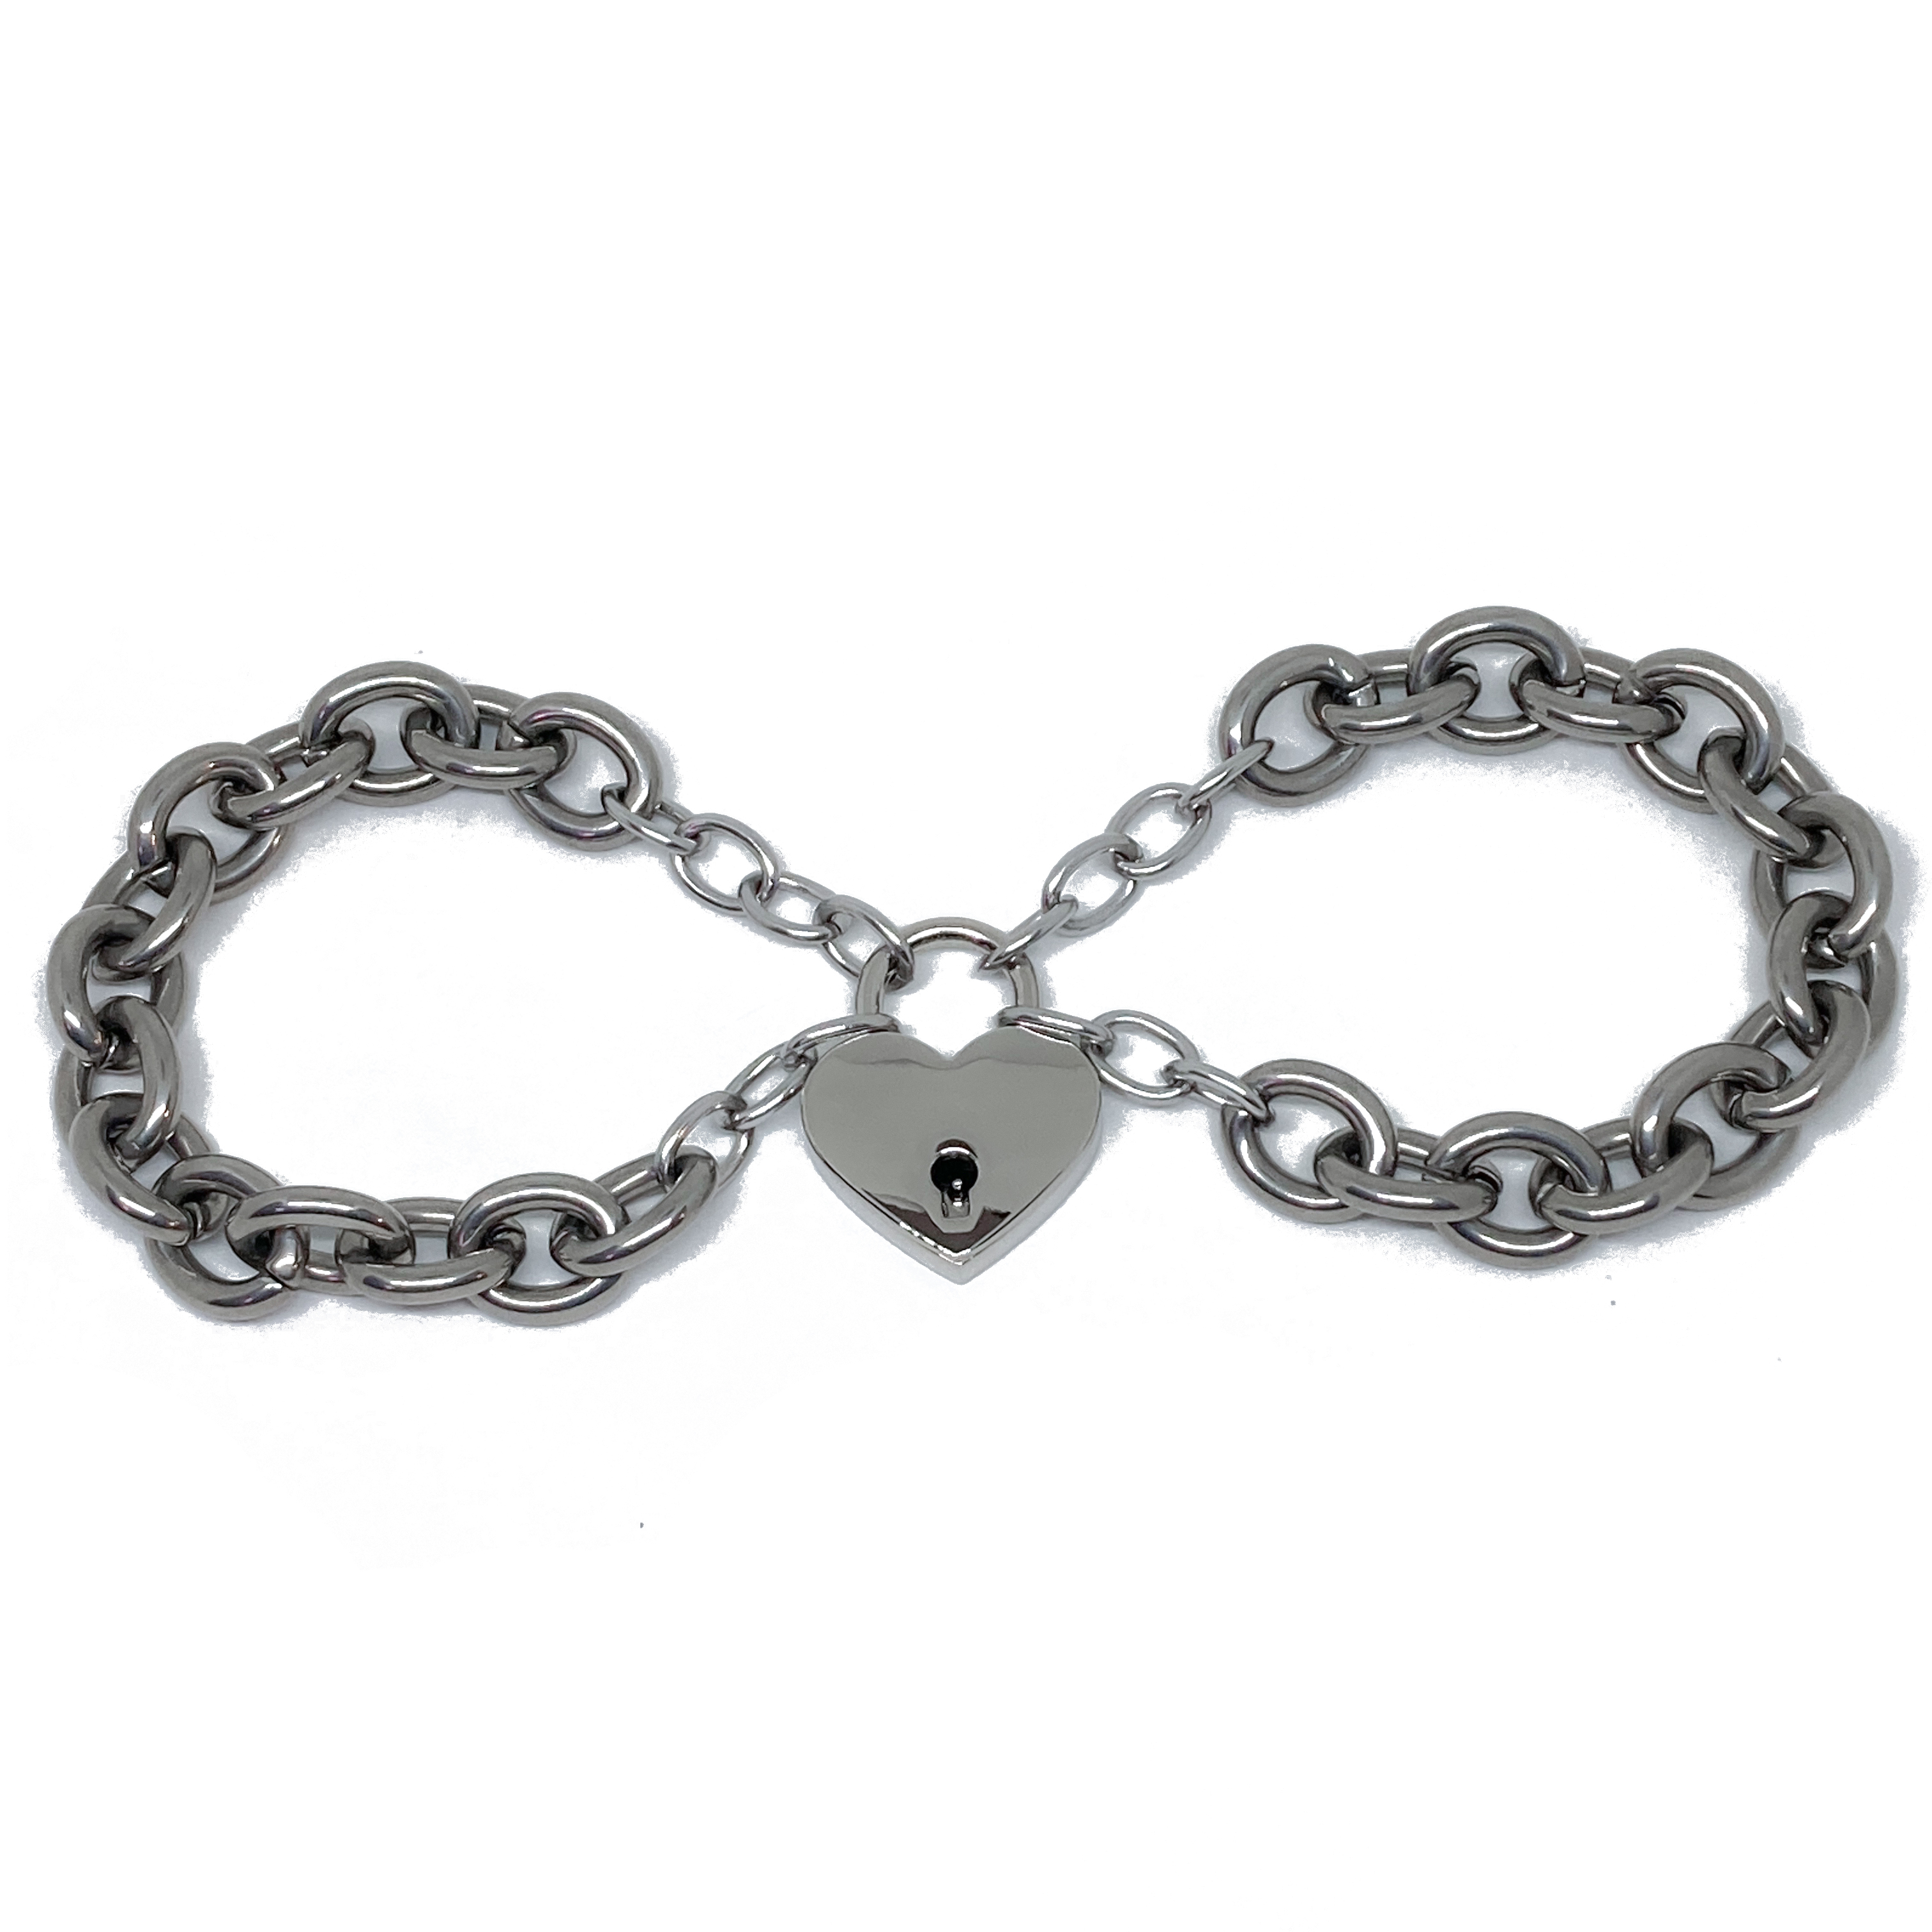 LOV3R handcuffs